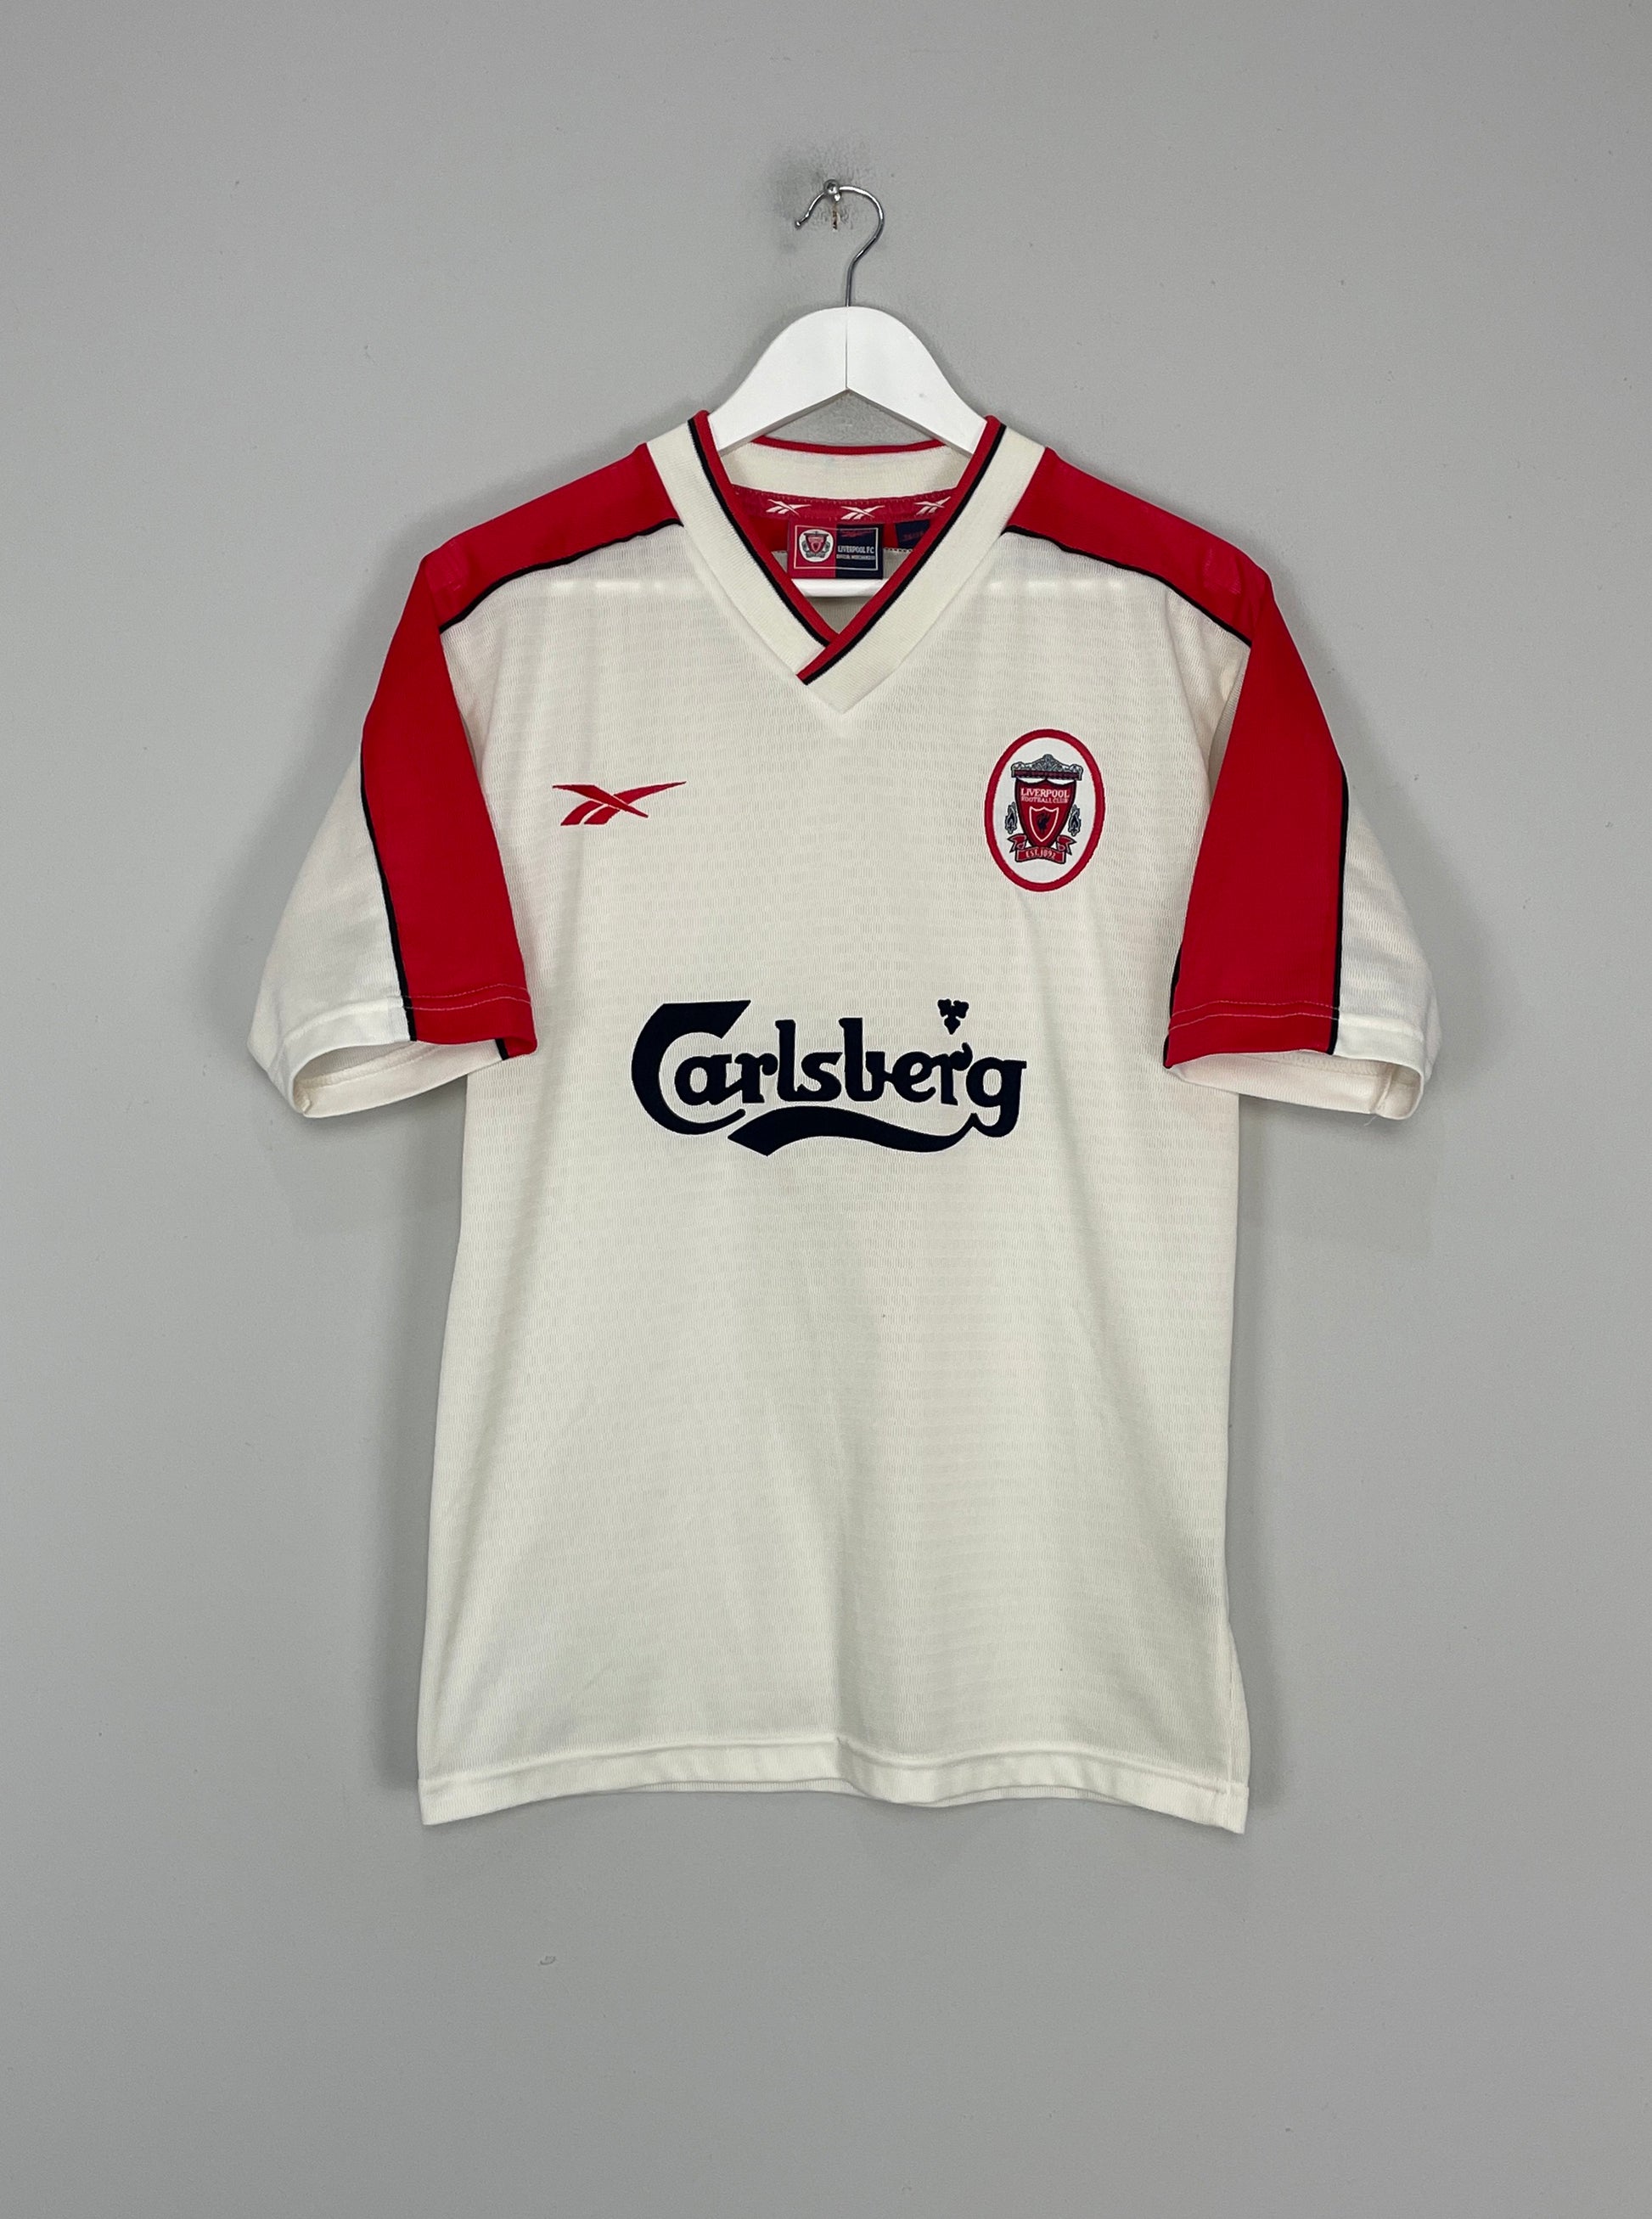 Cult Kits, Buy Liverpool Shirts